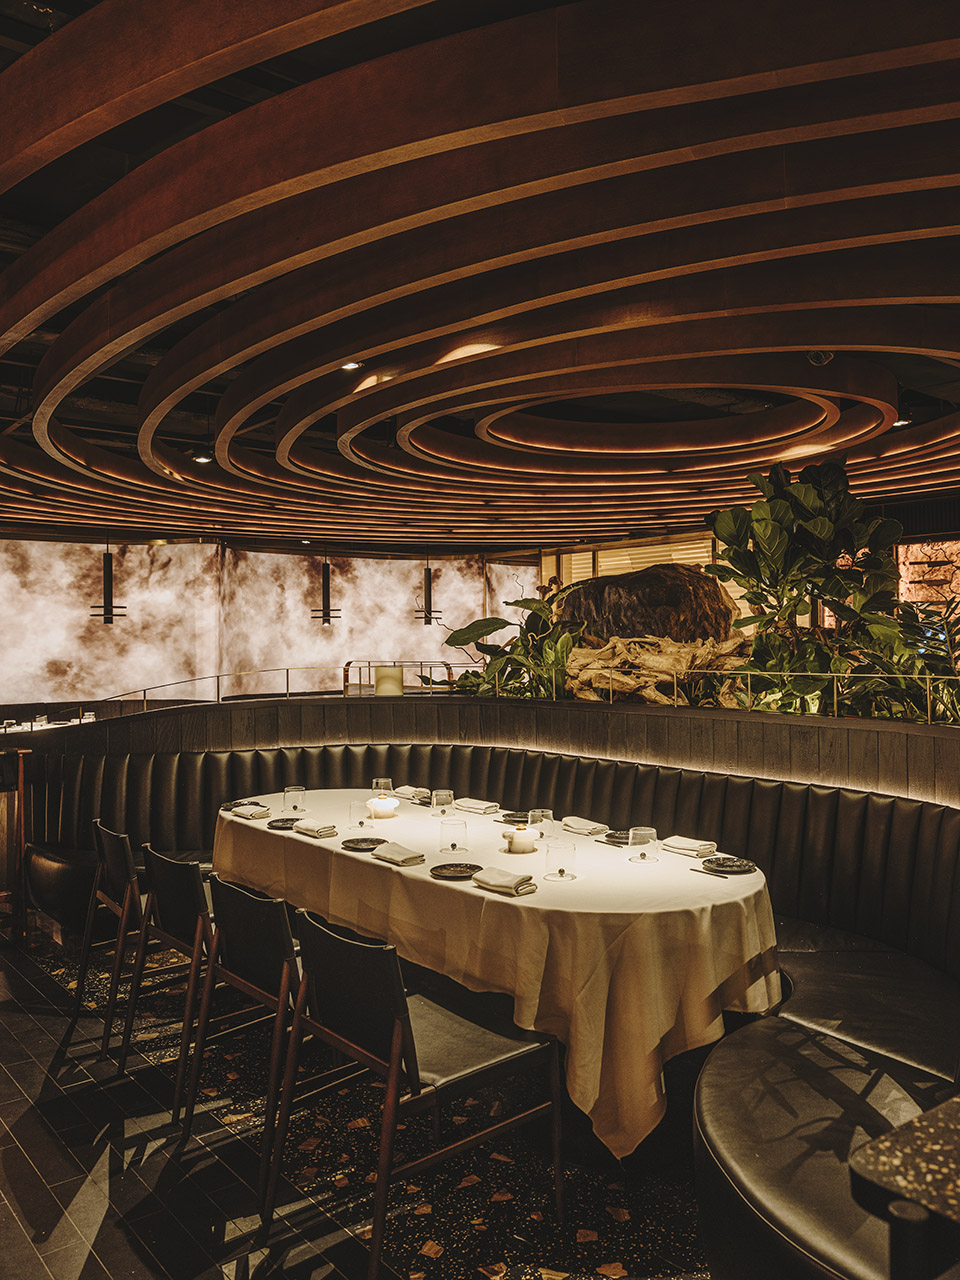 Leña餐厅，西班牙/木头、石头和炭火，提取最原始的烹饪精髓-29